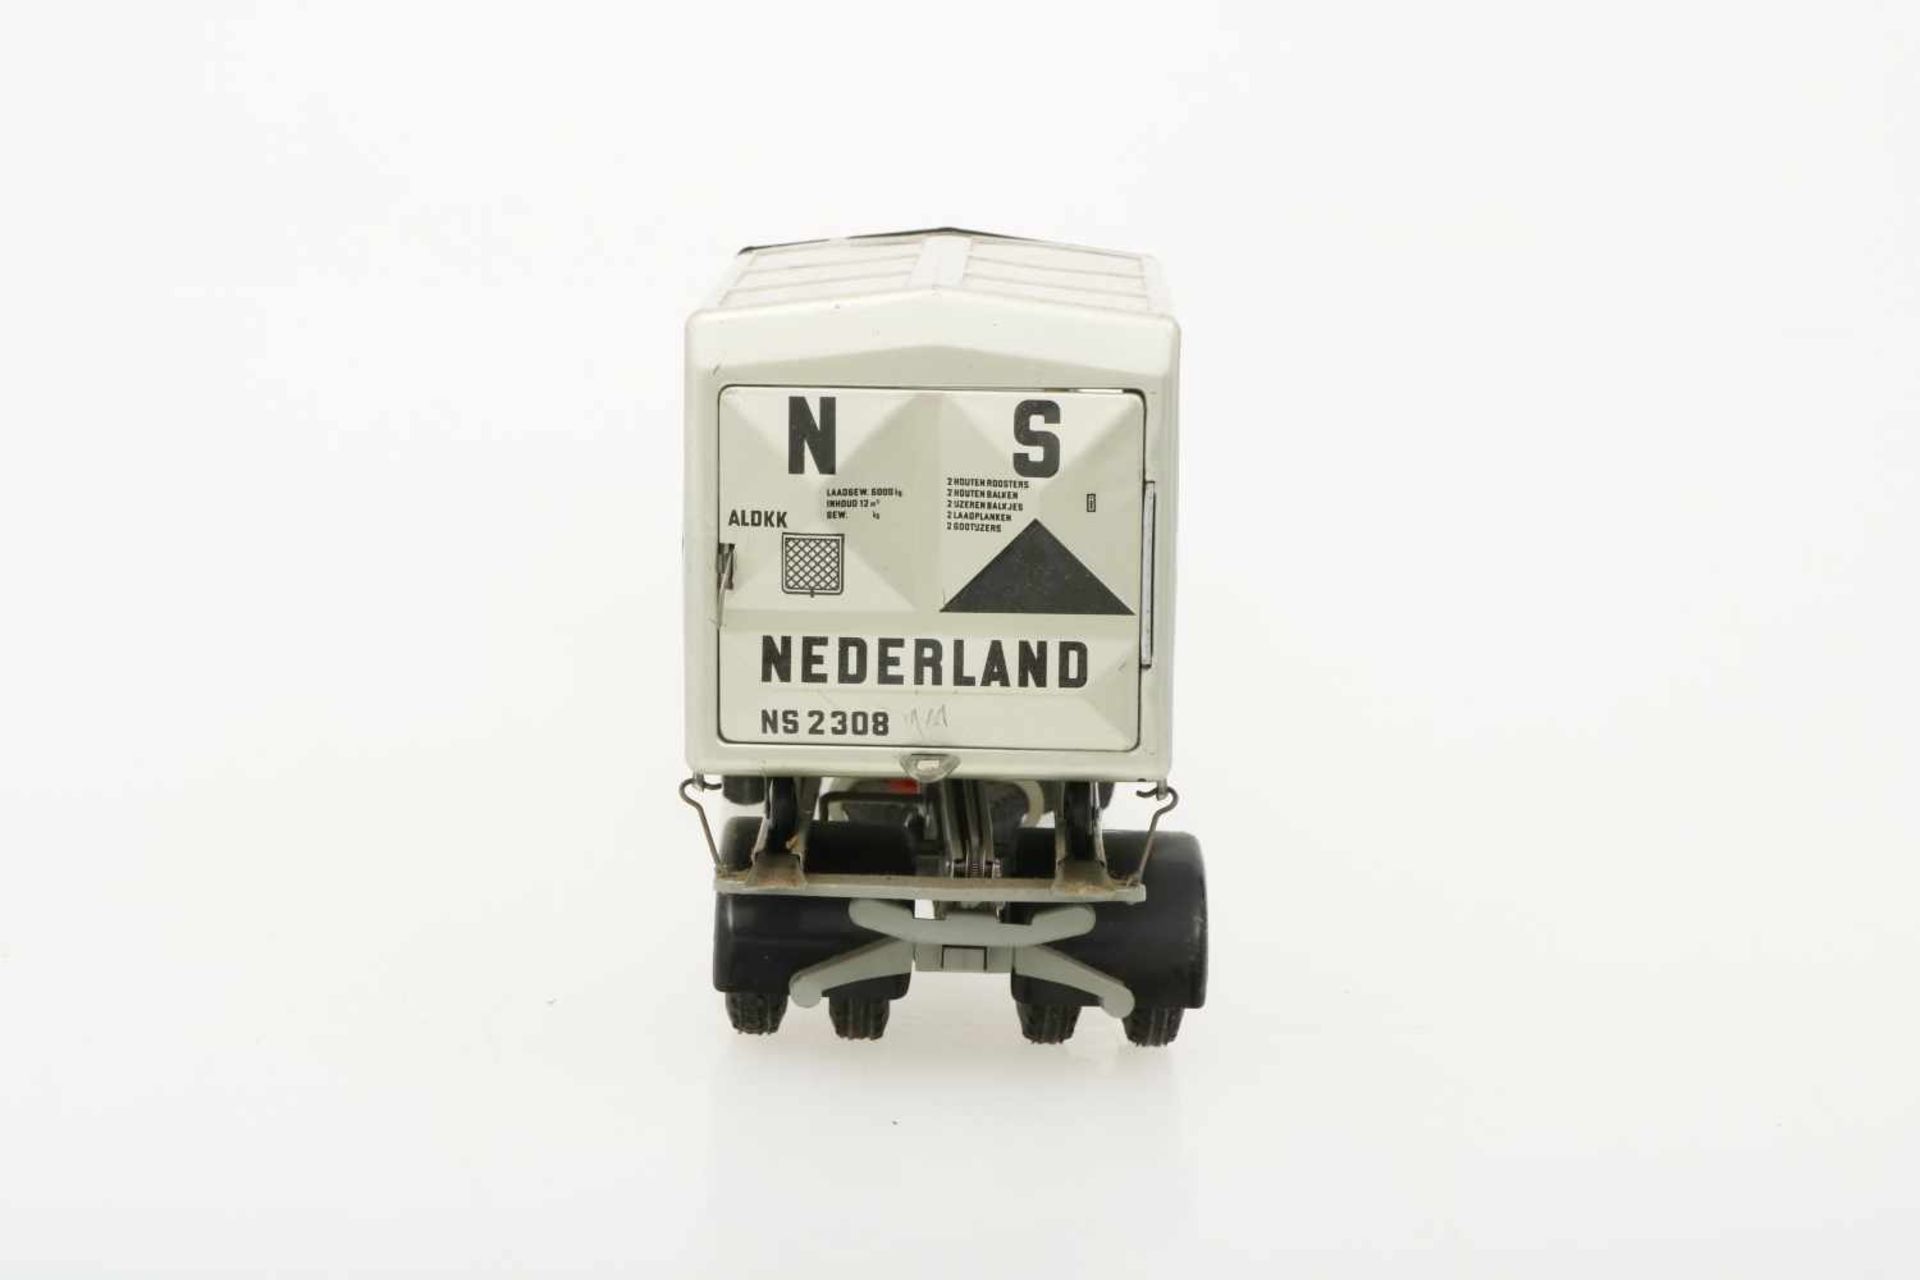 Arnold DAF truck van Gend & Loos met container NS van huis tot huis. - Image 5 of 5